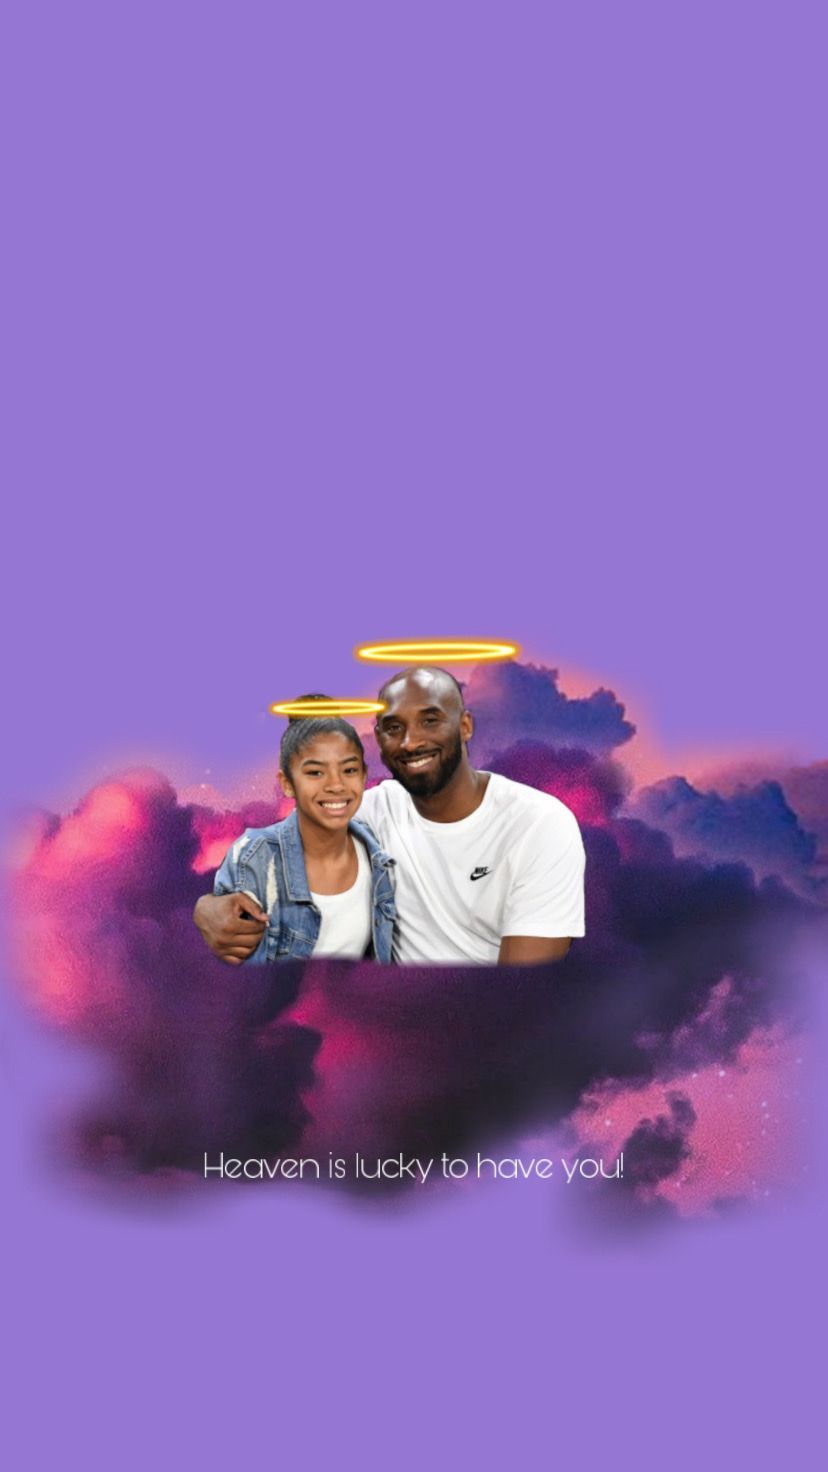 Kobe and Gianna Bryant wallpaper I made for my phone. rip to the Bryant family - Kobe Bryant